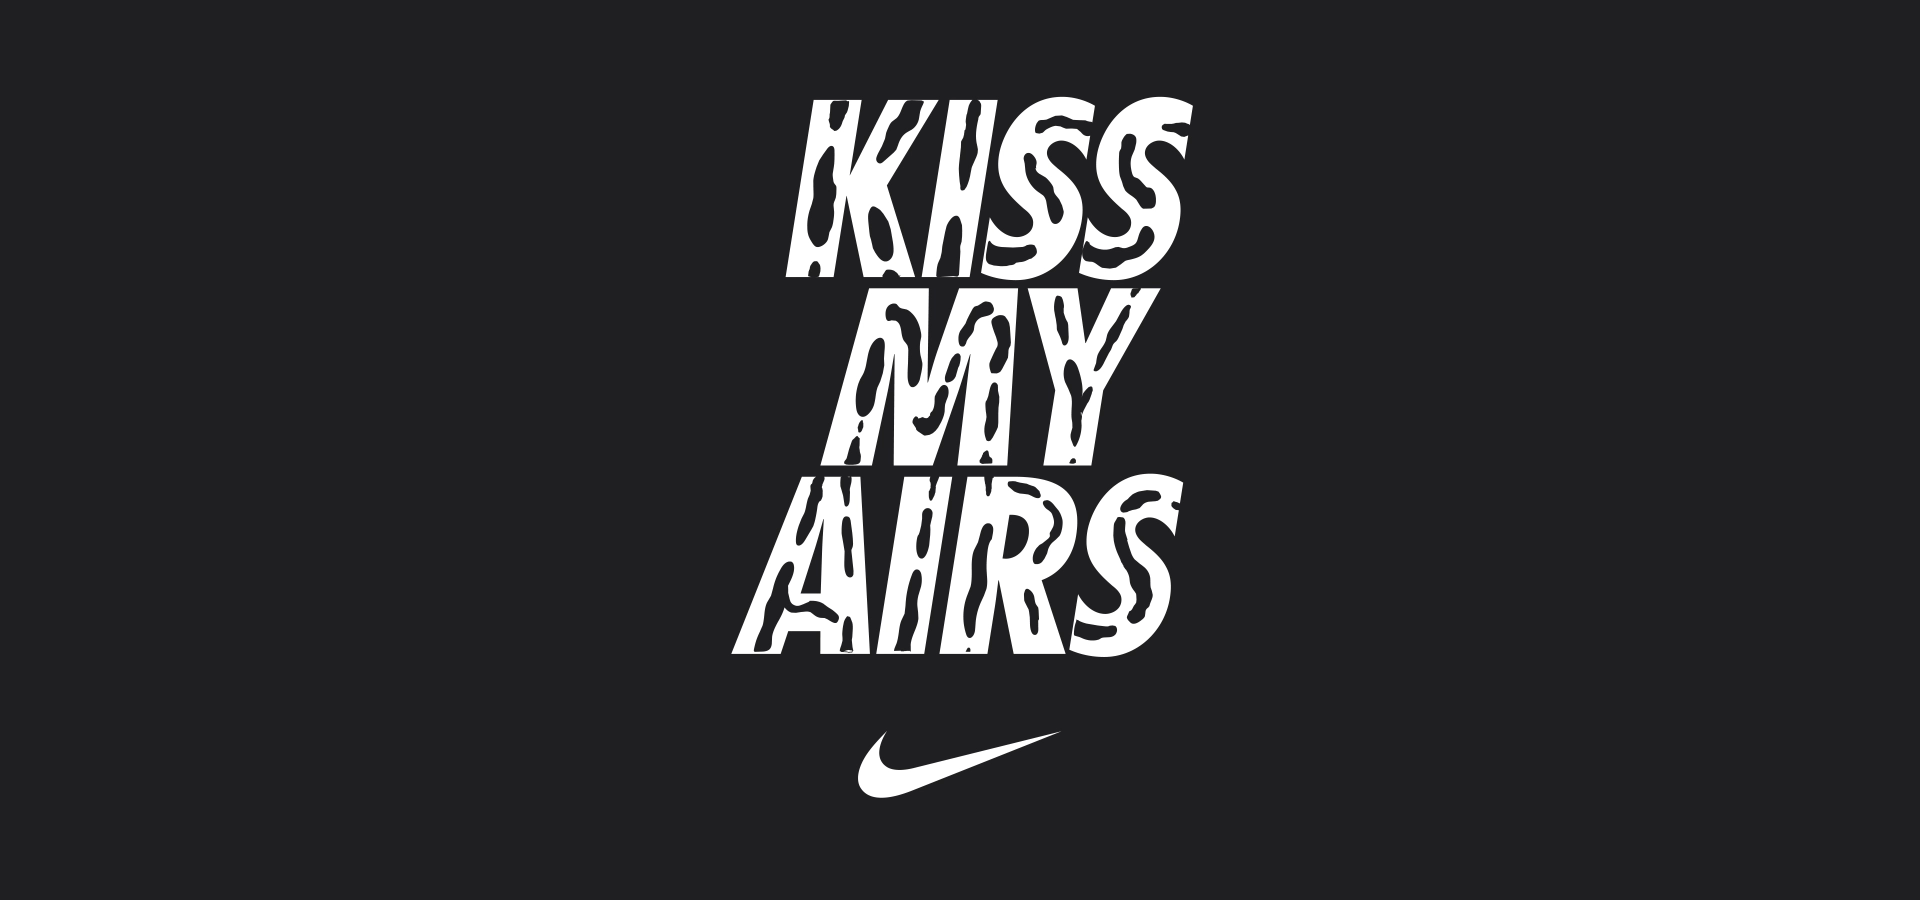 Niike Vapor Max Logo - Nike: Vapormax Day | Kiss My Airs | Winston Duke | Motion & Photography